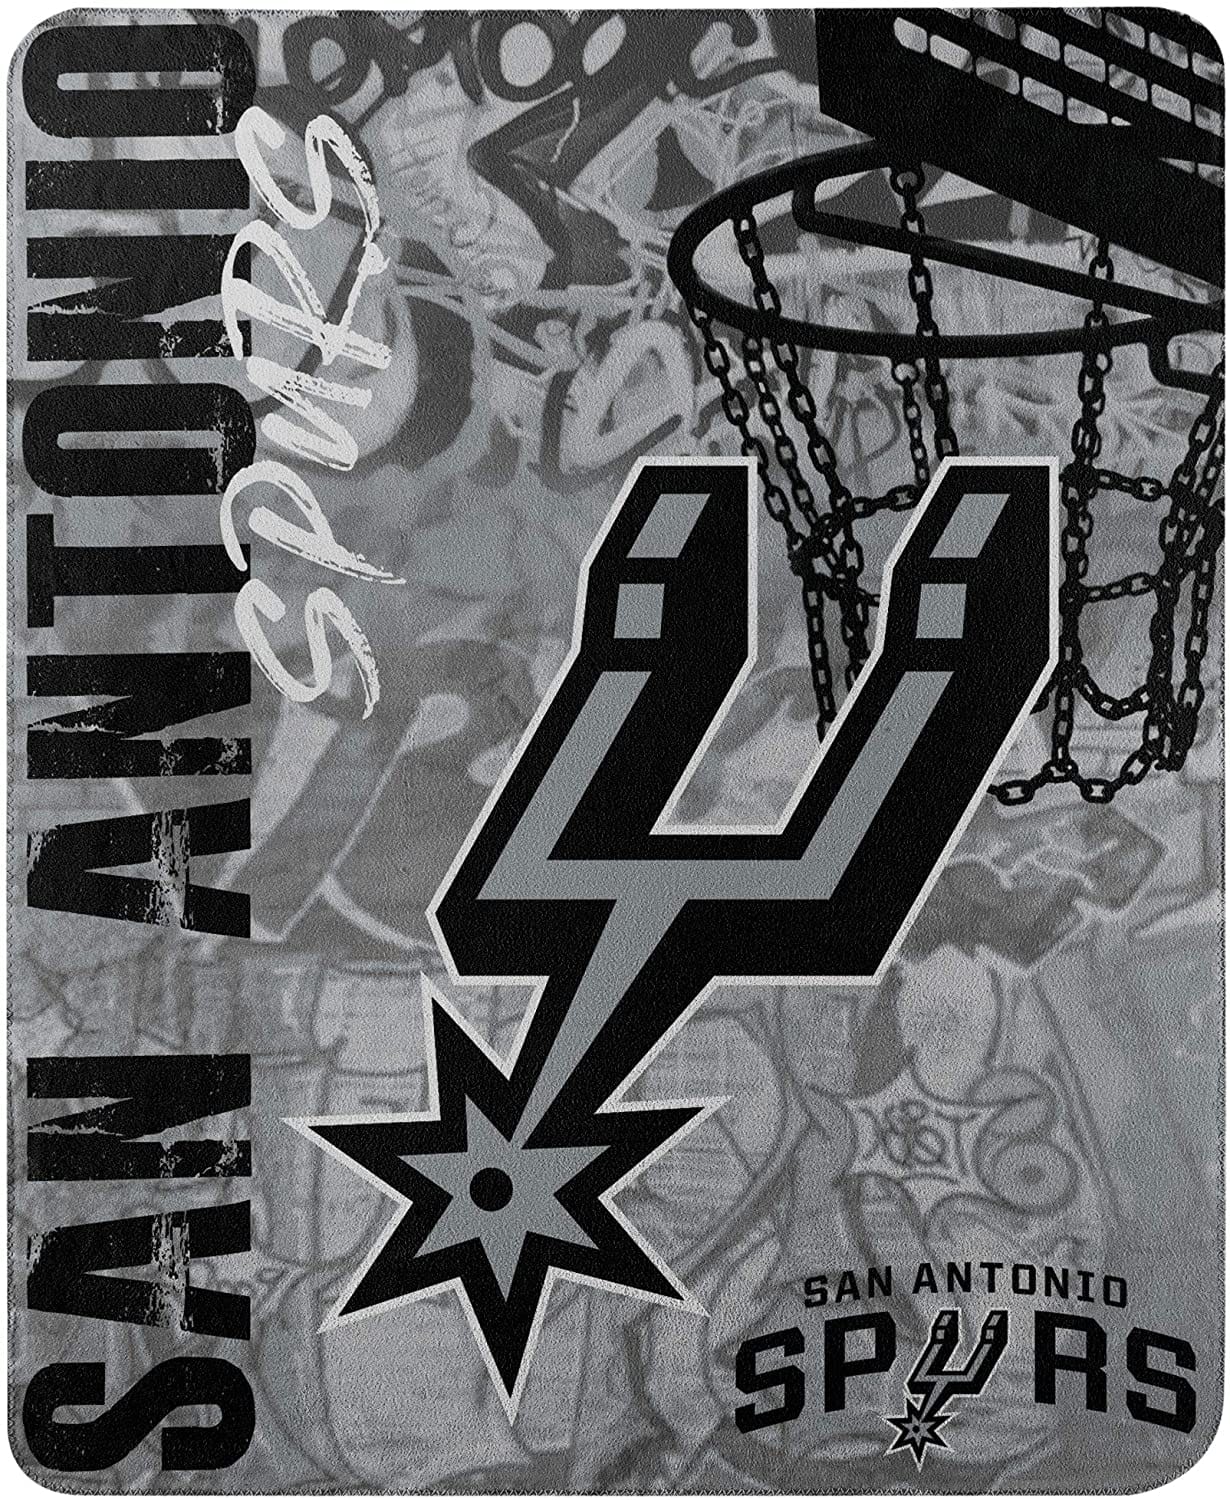 Officially Licensed Nba Throw San Antonio Spurs Fleece Blanket